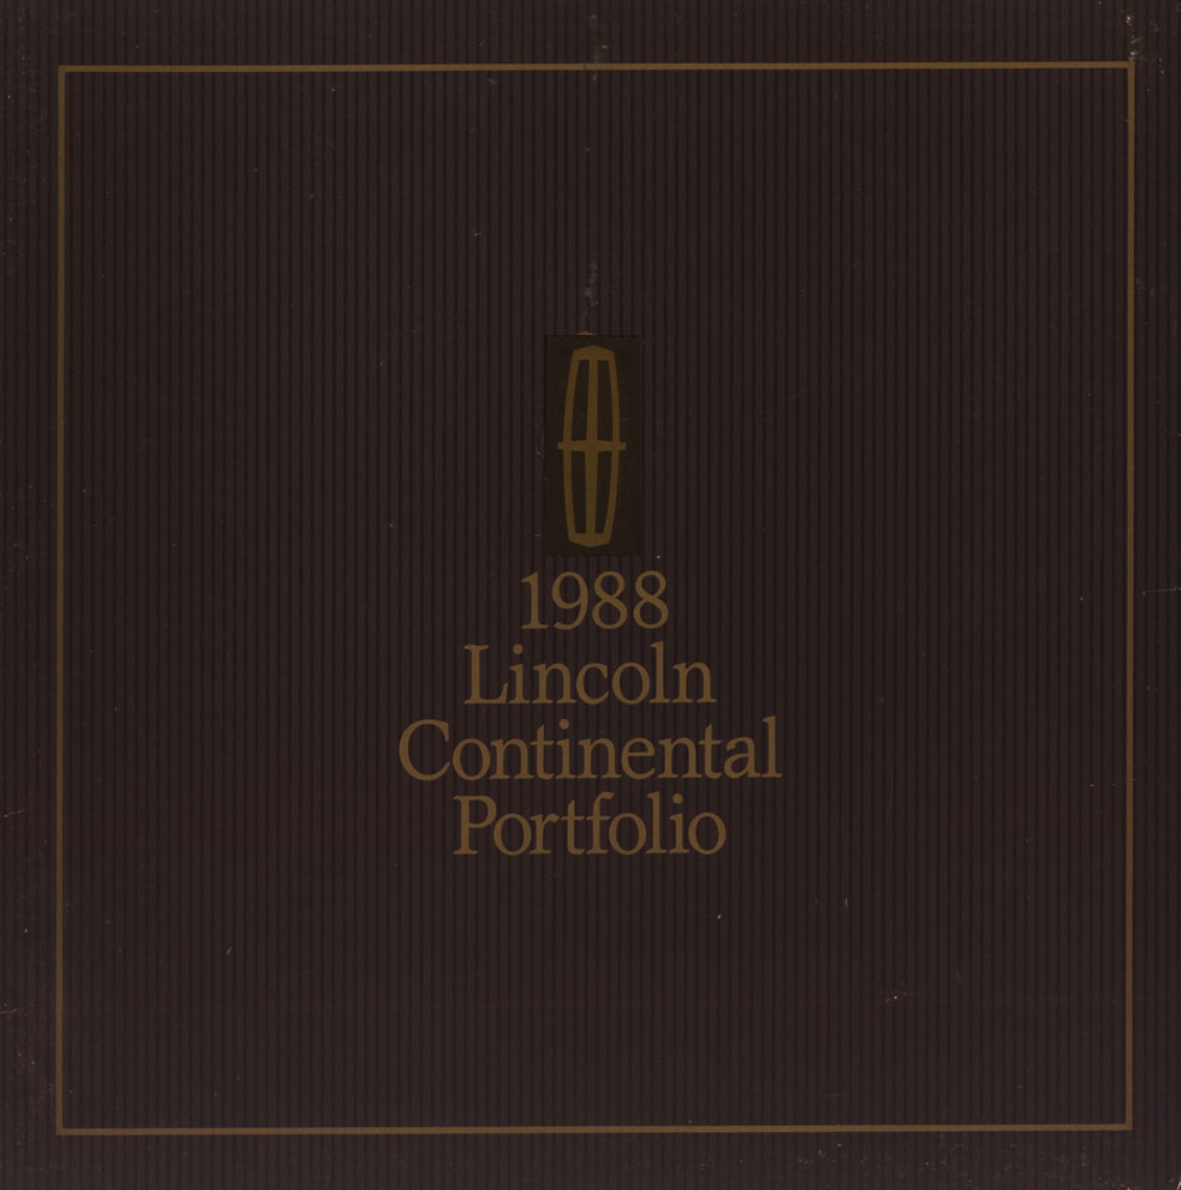 n_1988 Lincoln Continental Portfolio-01.jpg